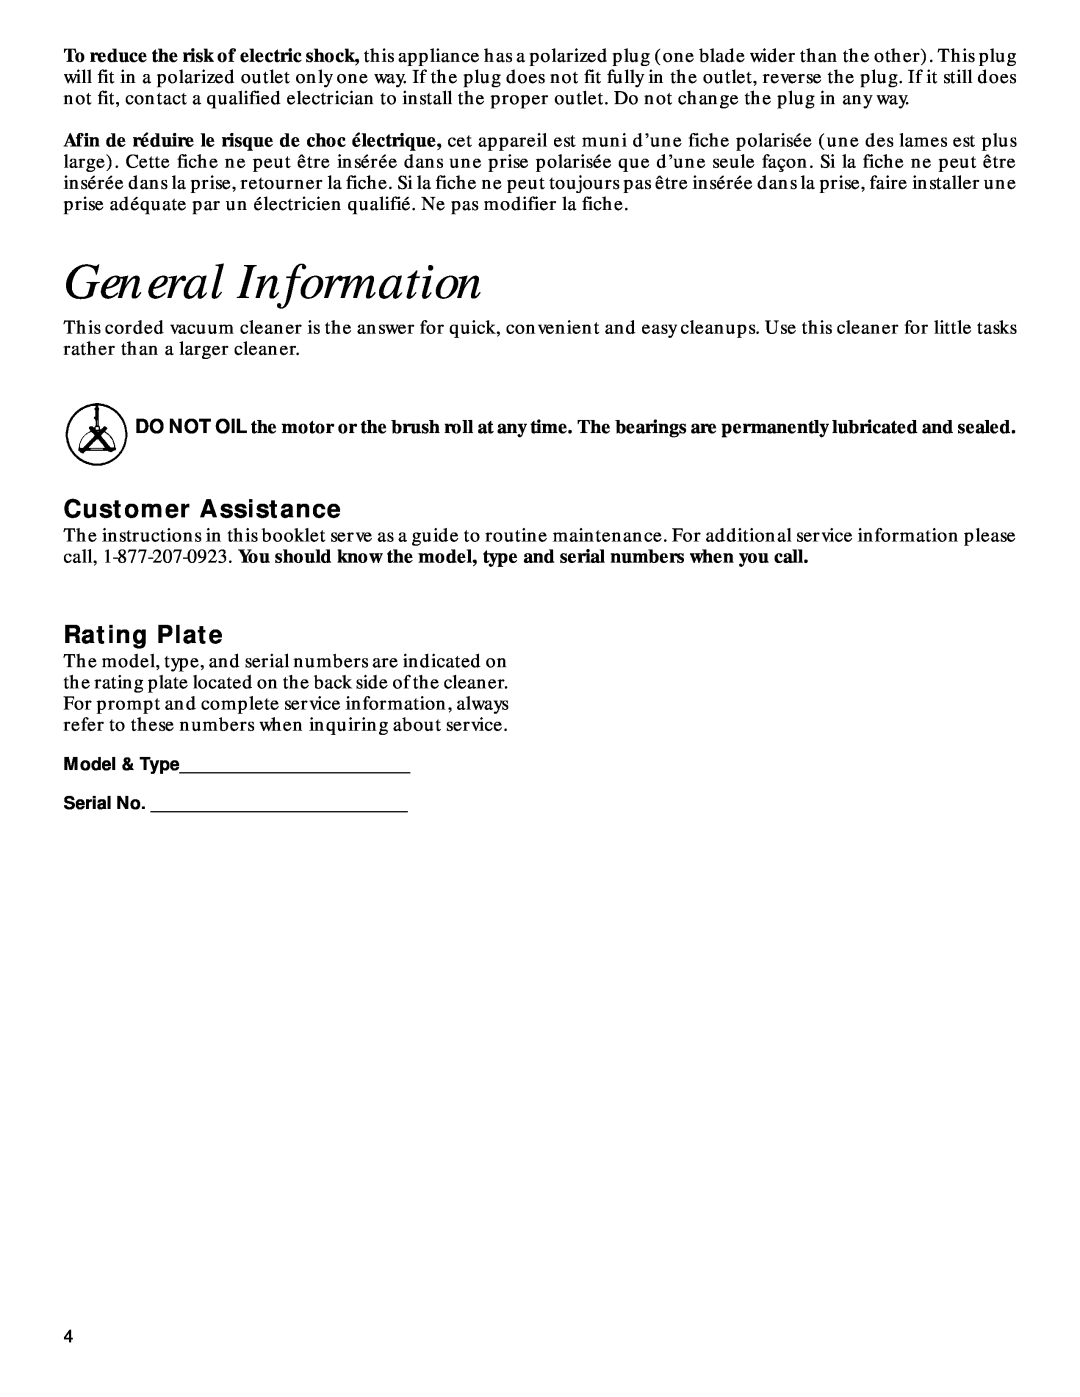 GE 106687, 71337 warranty General Information, Customer Assistance, Rating Plate 